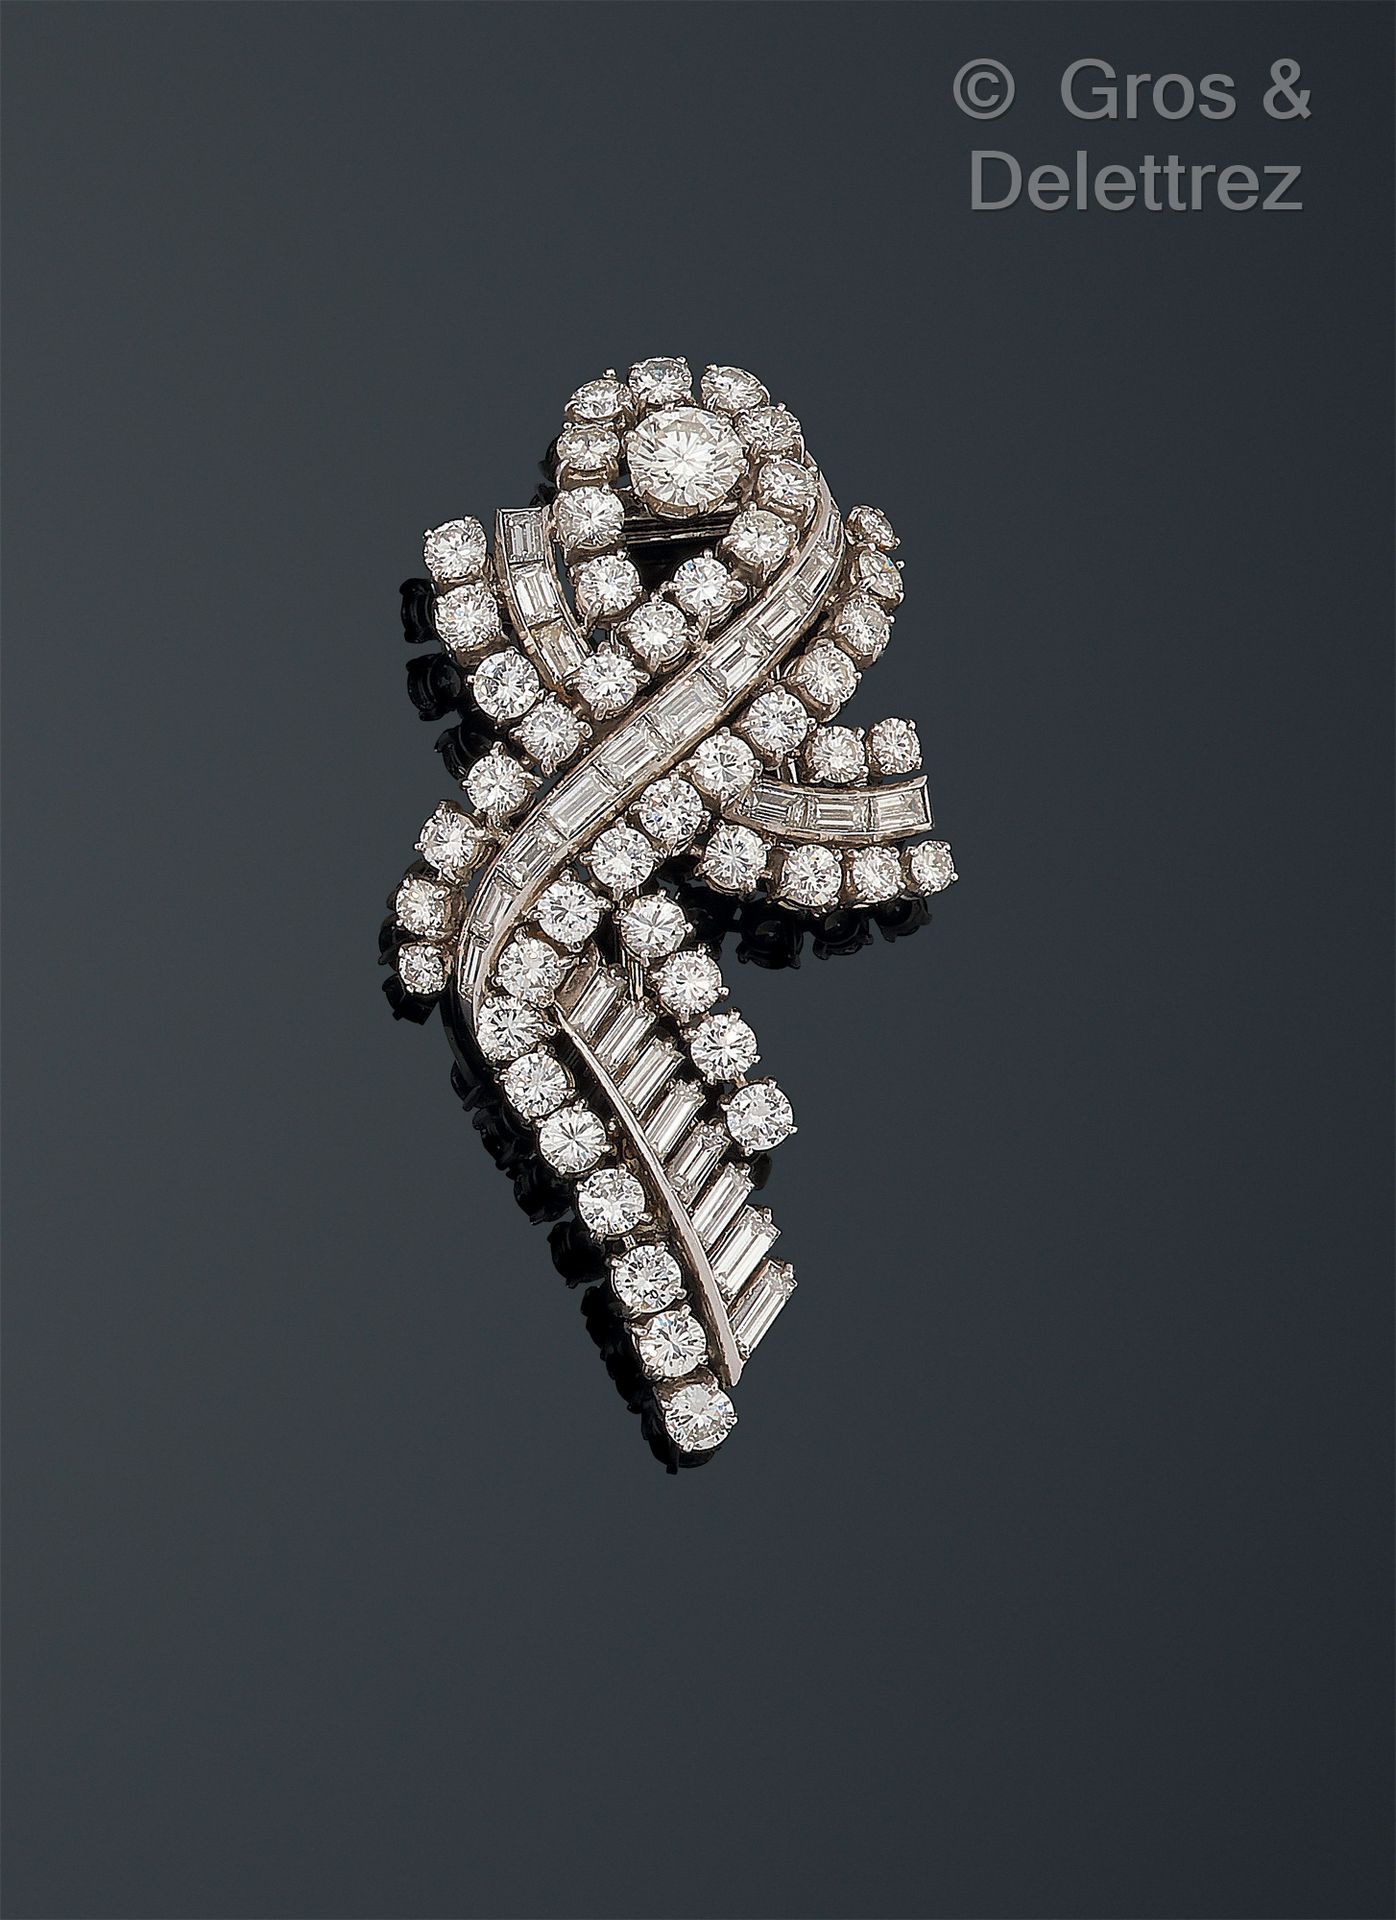 Null 法国作品，1950-1960 - 750千分之一白金和950千分之一铂金的涡旋式领夹，镶嵌明亮式切割和长方形切割钻石。徽章为千分之七十五的白金材质。
&hellip;